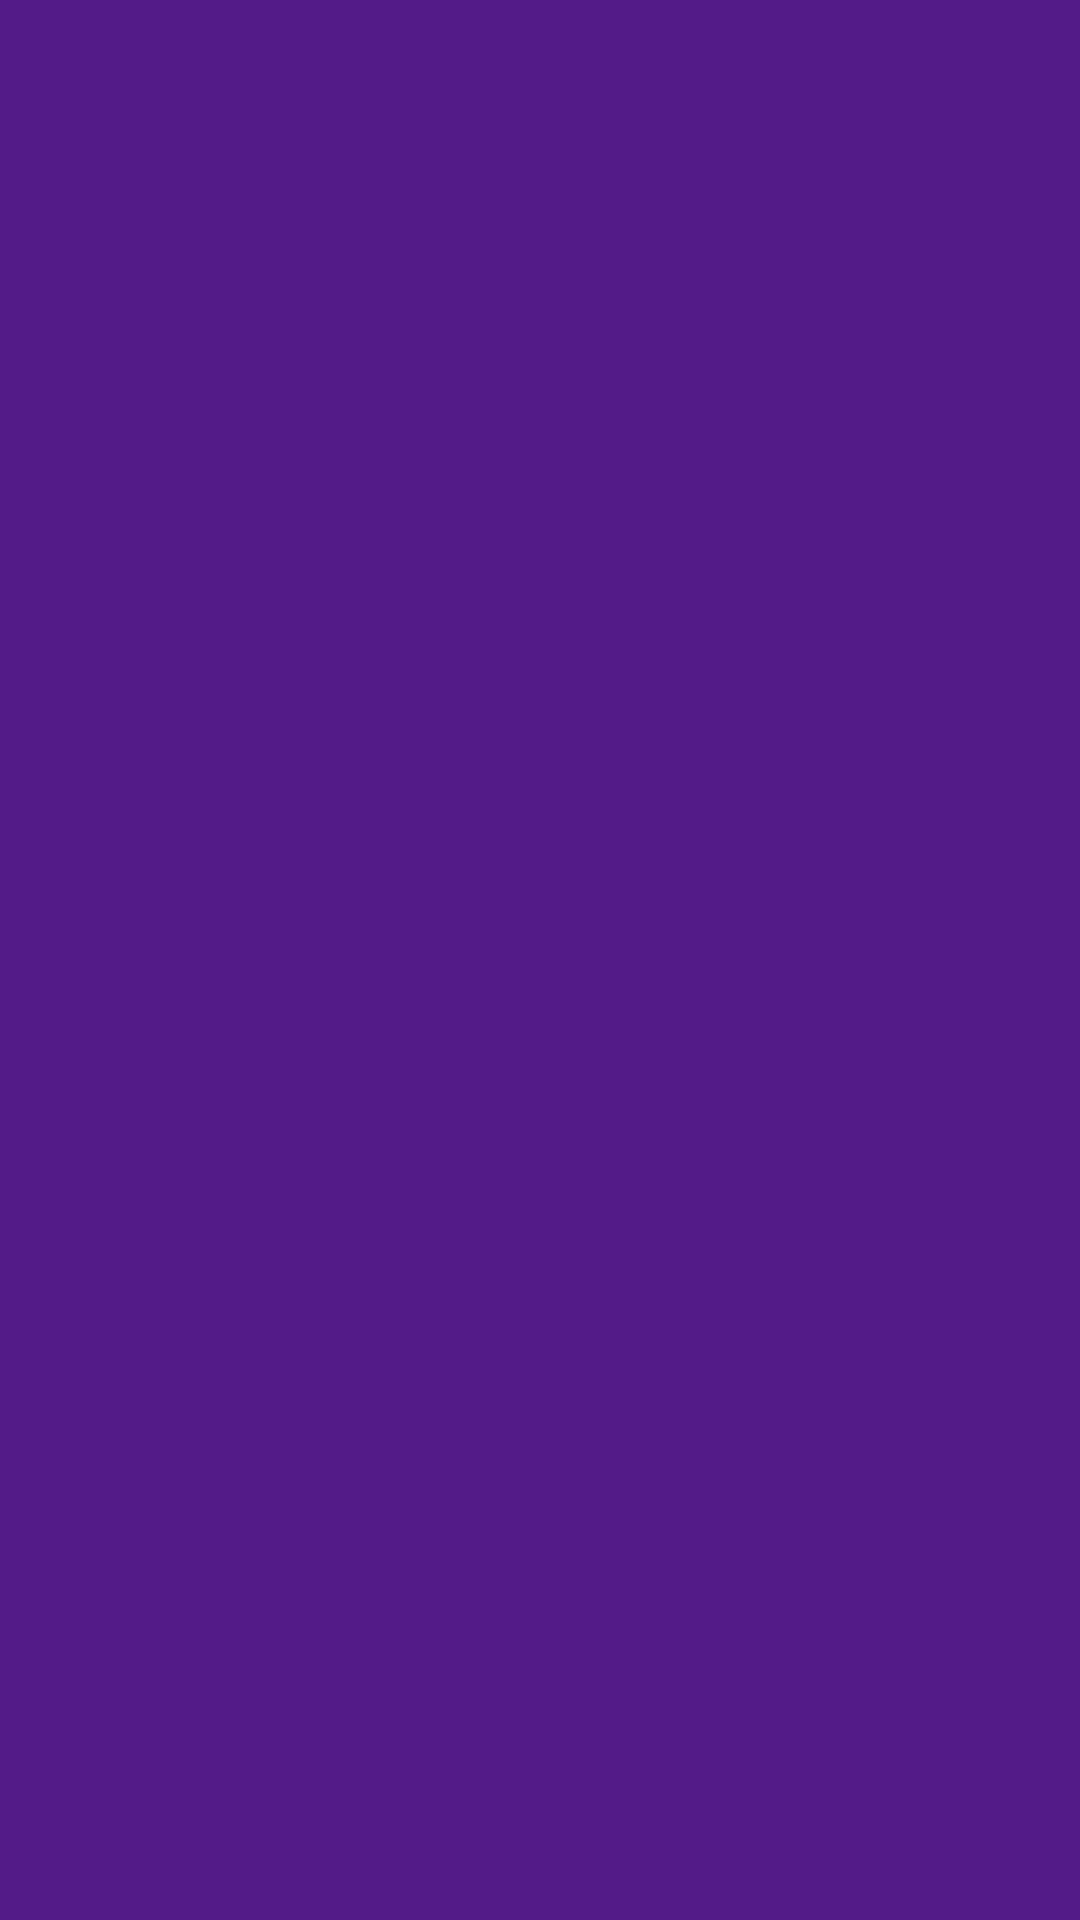 Indigo Plain Purple Wallpaper